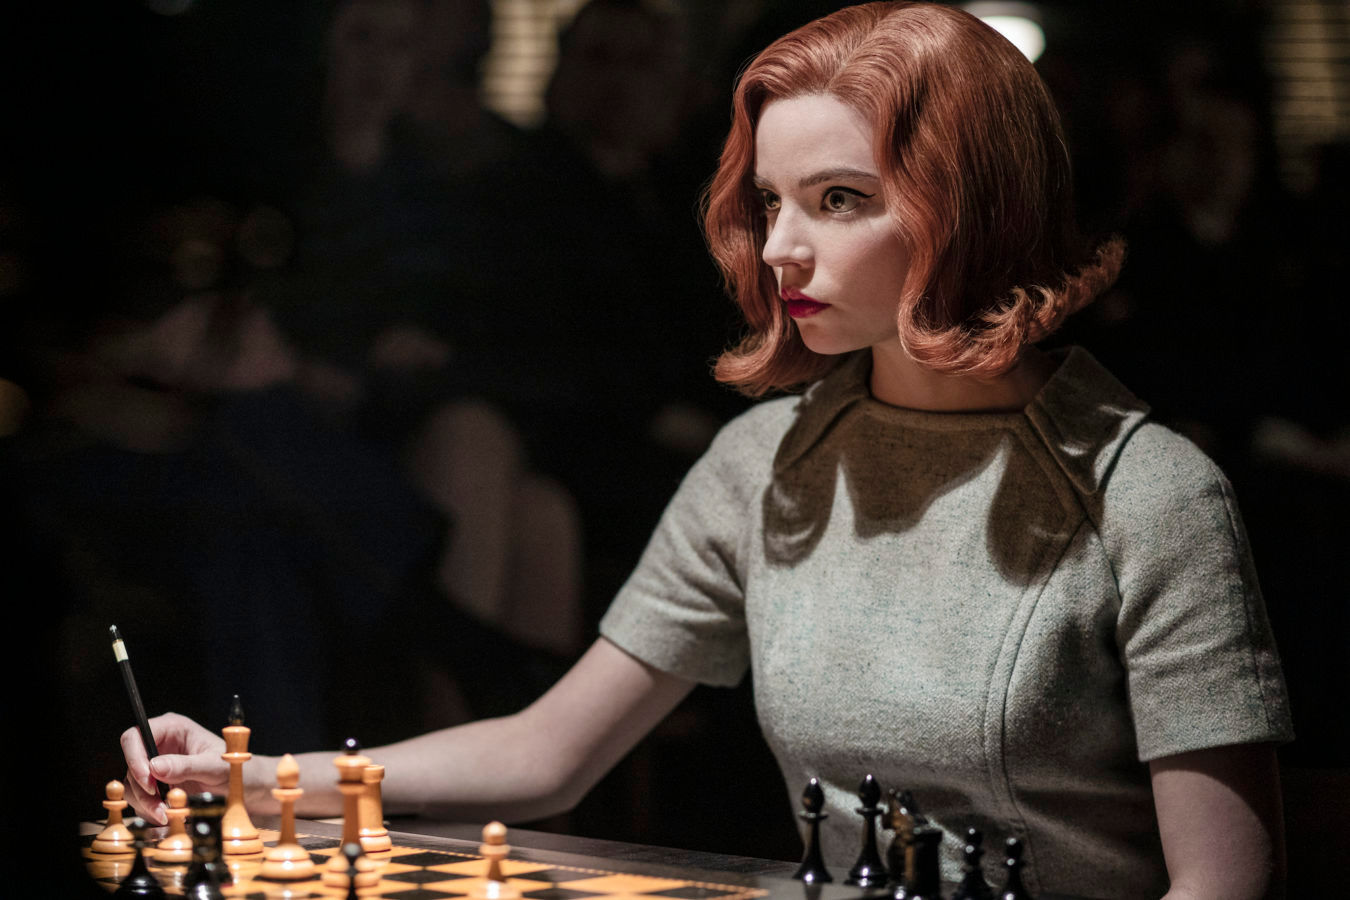 Netflix show The Queen’s Gambit sparks fresh interest in chess